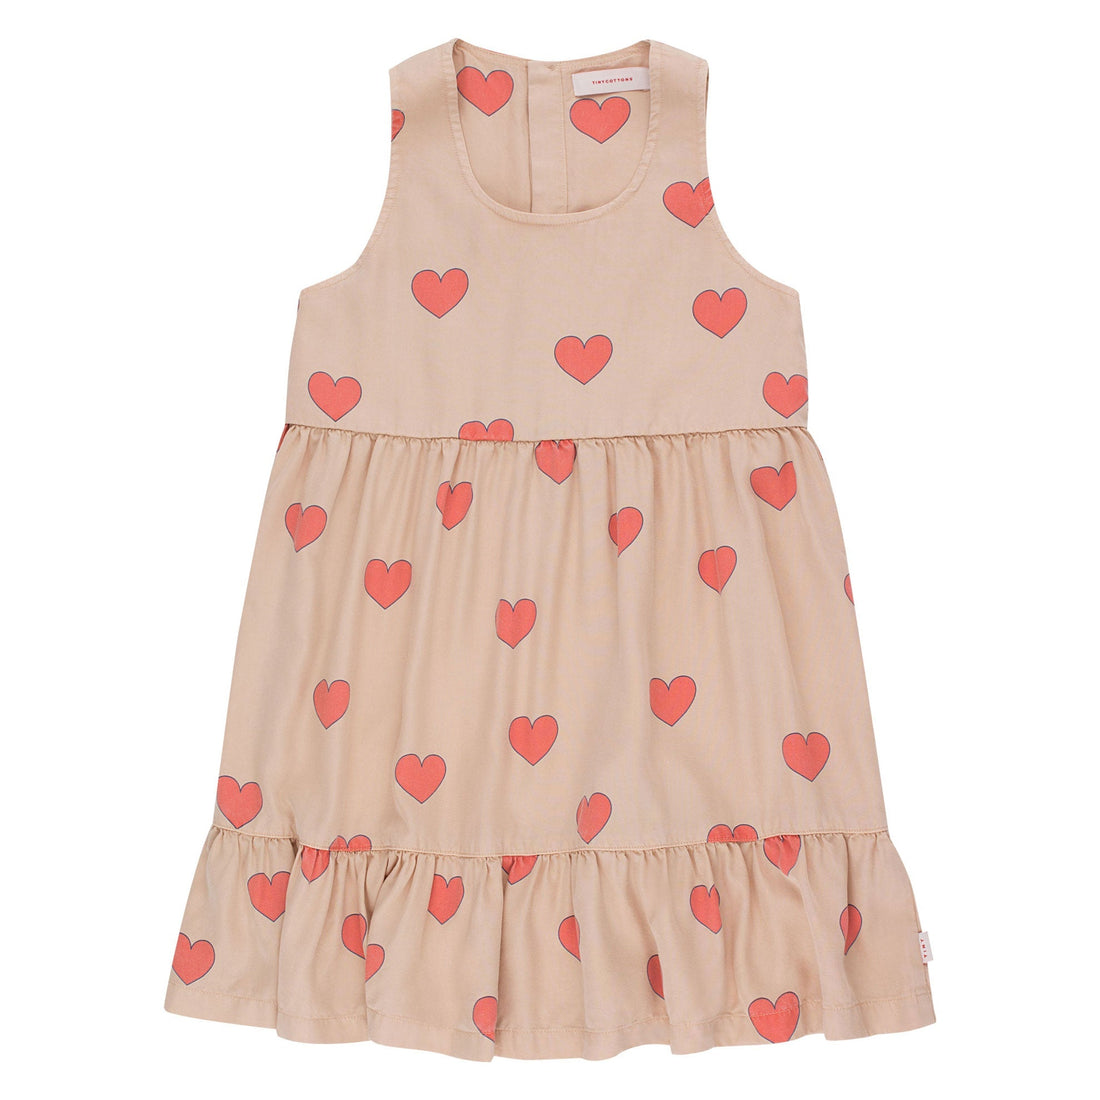 Tiny Cottons dresses Tiny Cottons Hearts Dress